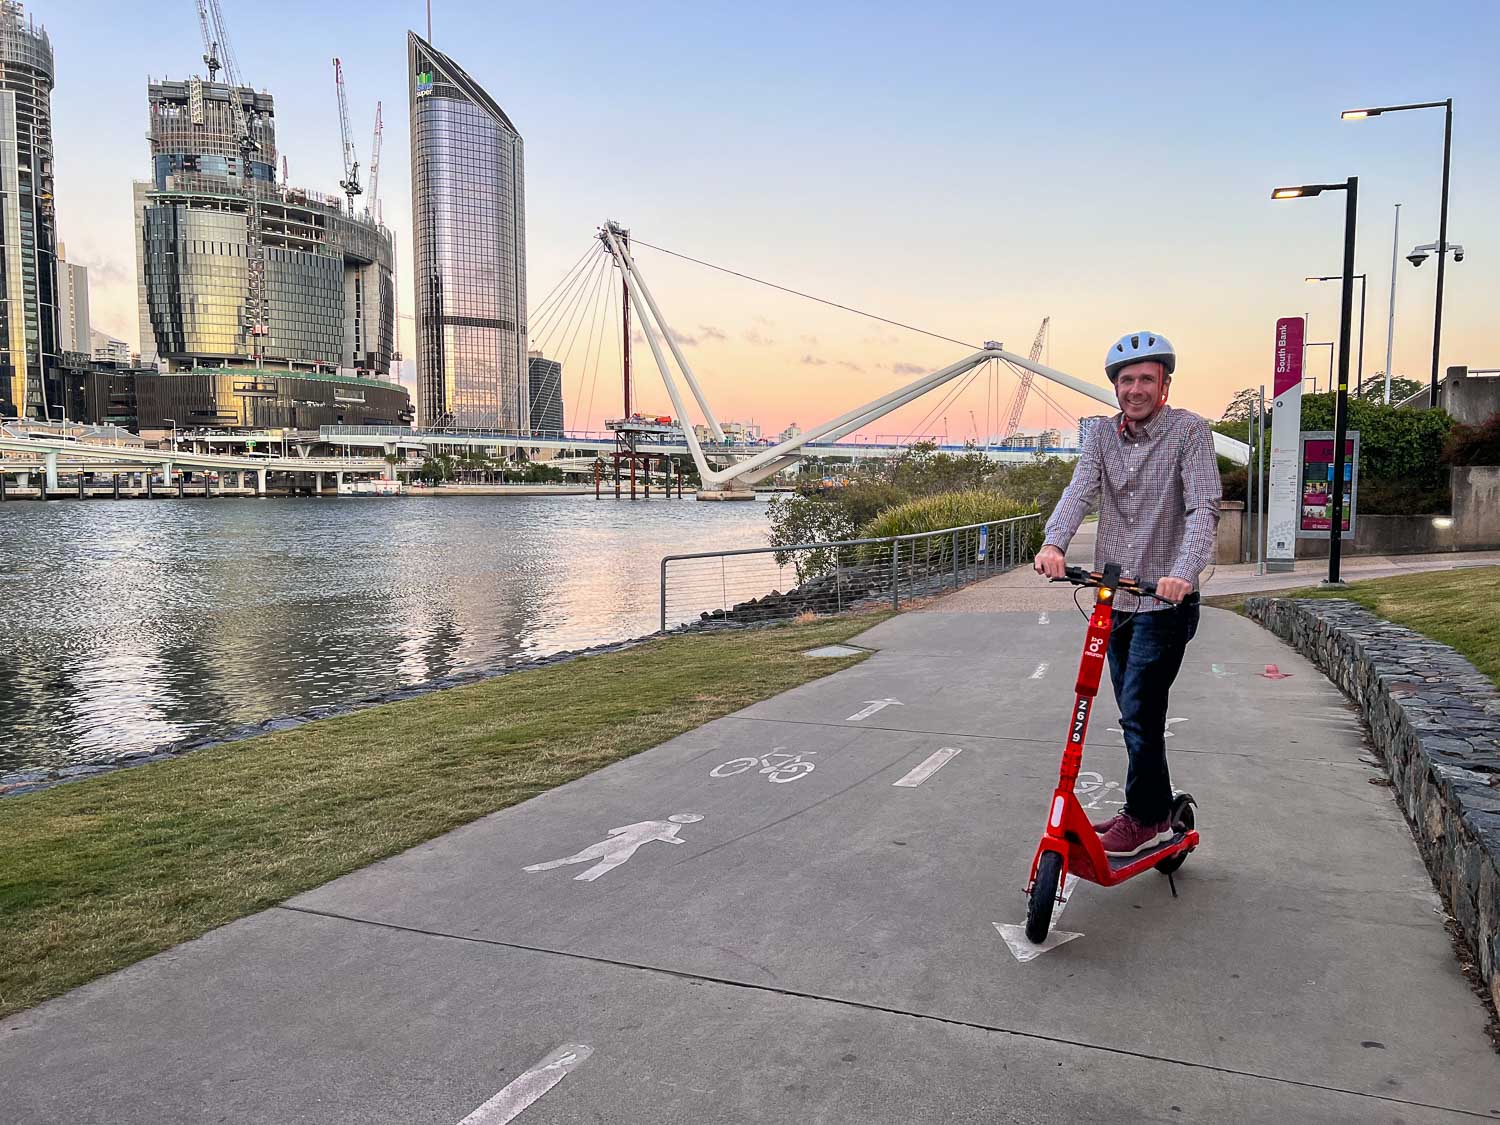 Simon on a scooter along the riverside walkway, Brisbane, Australia